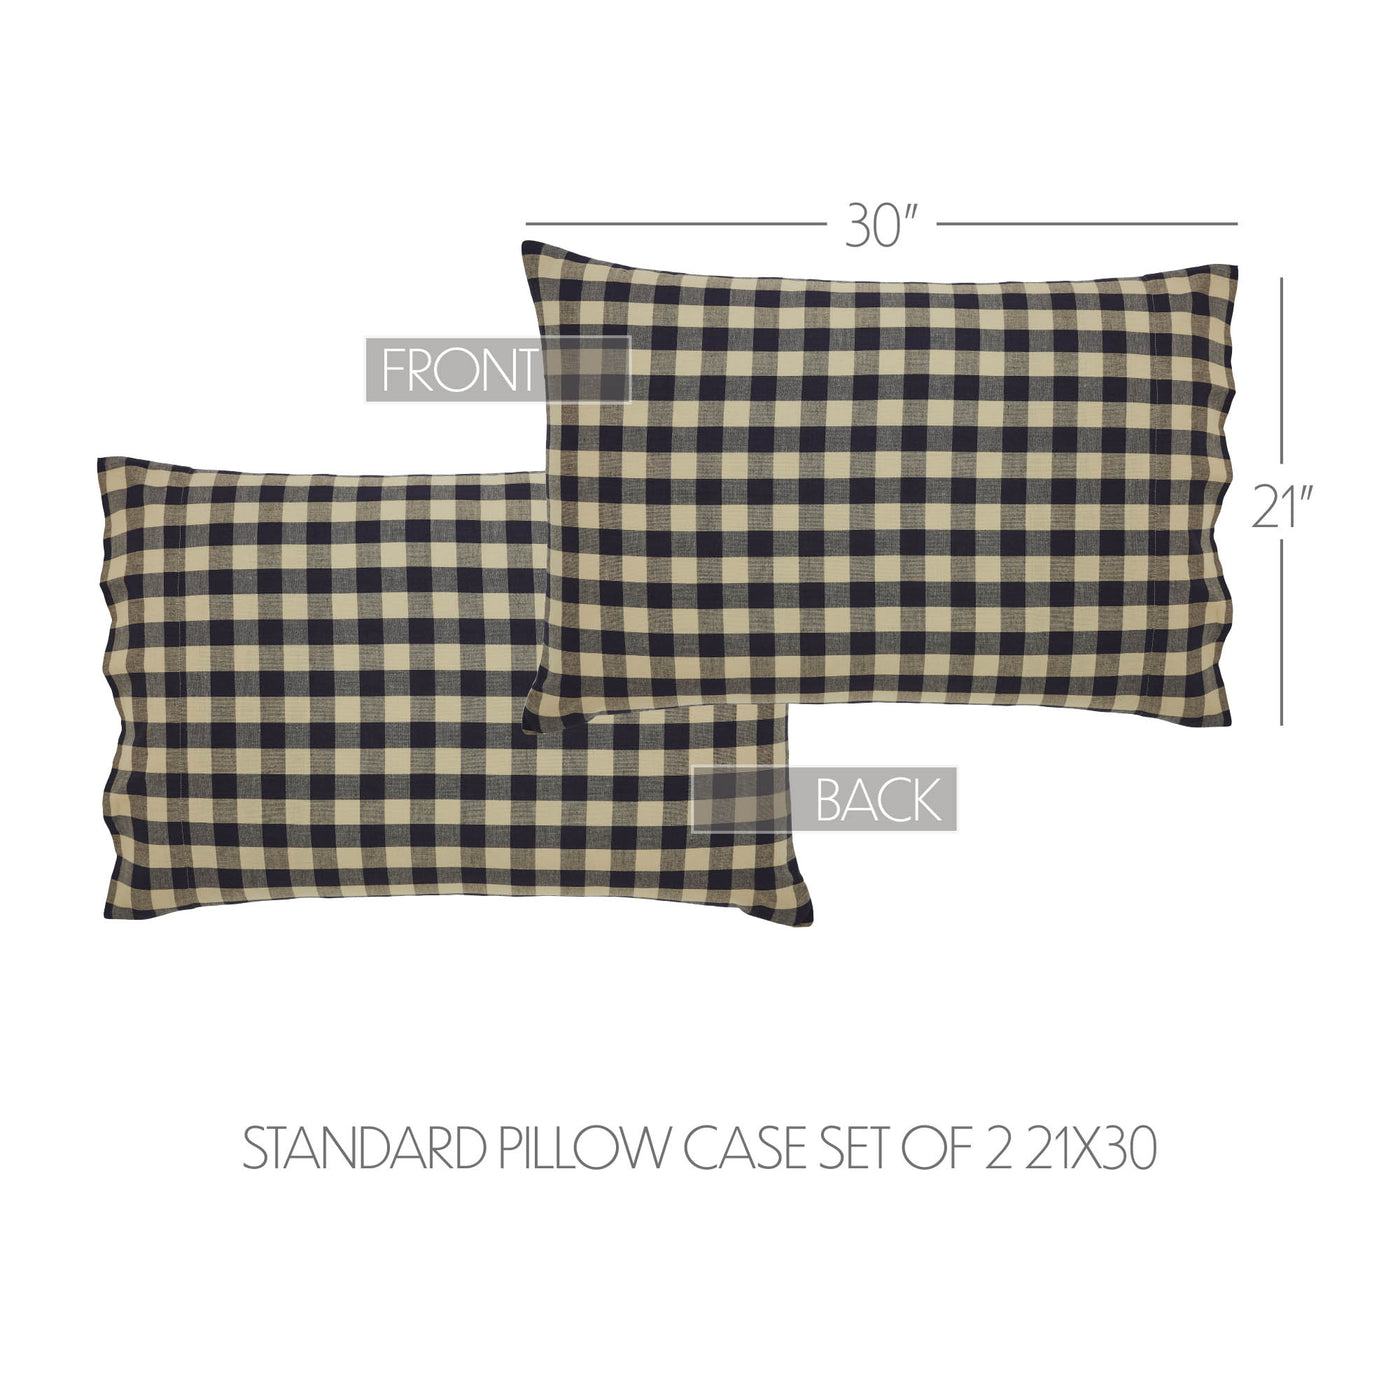 My Country Navy & Khaki Standard Pillow Case Set